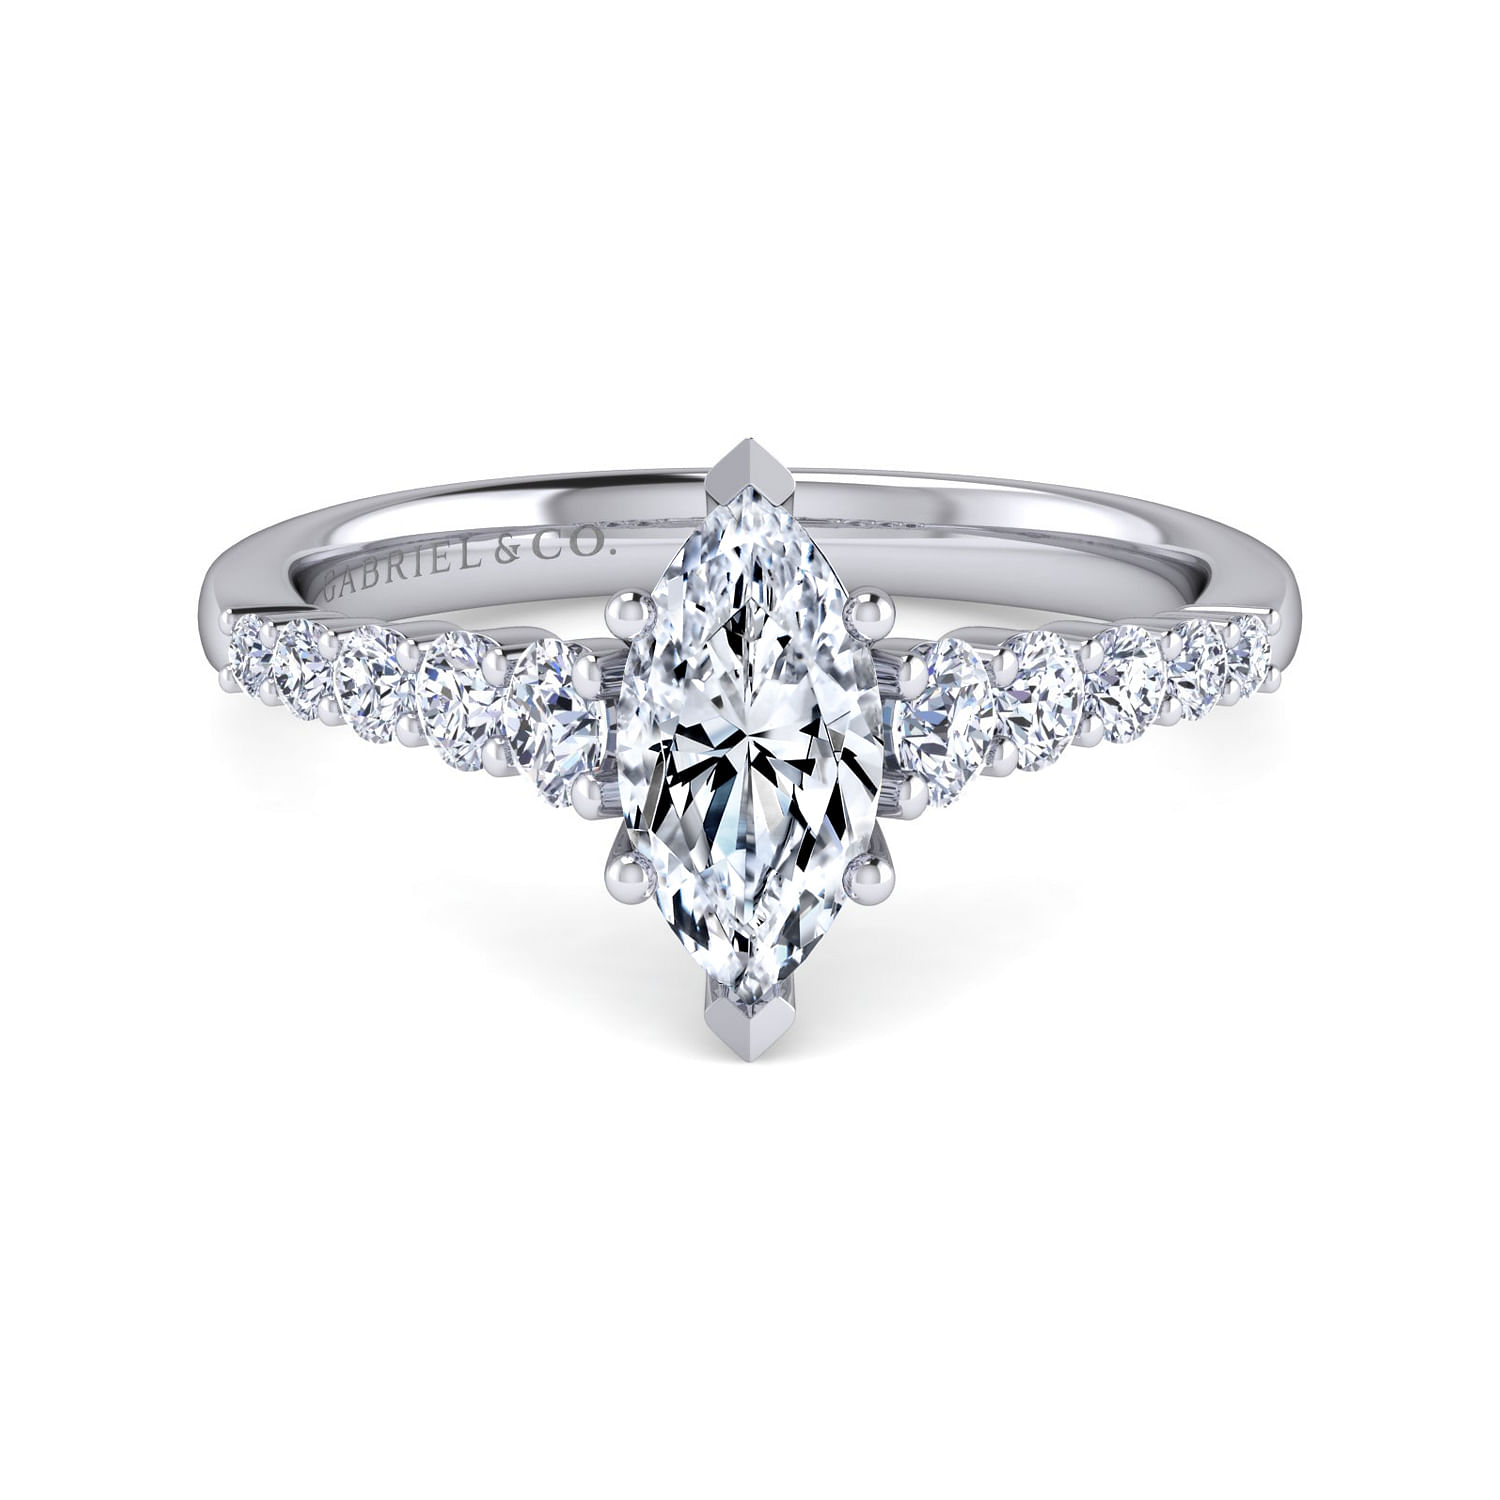 Reed - 14K White Gold Marquise Shape Diamond Engagement Ring